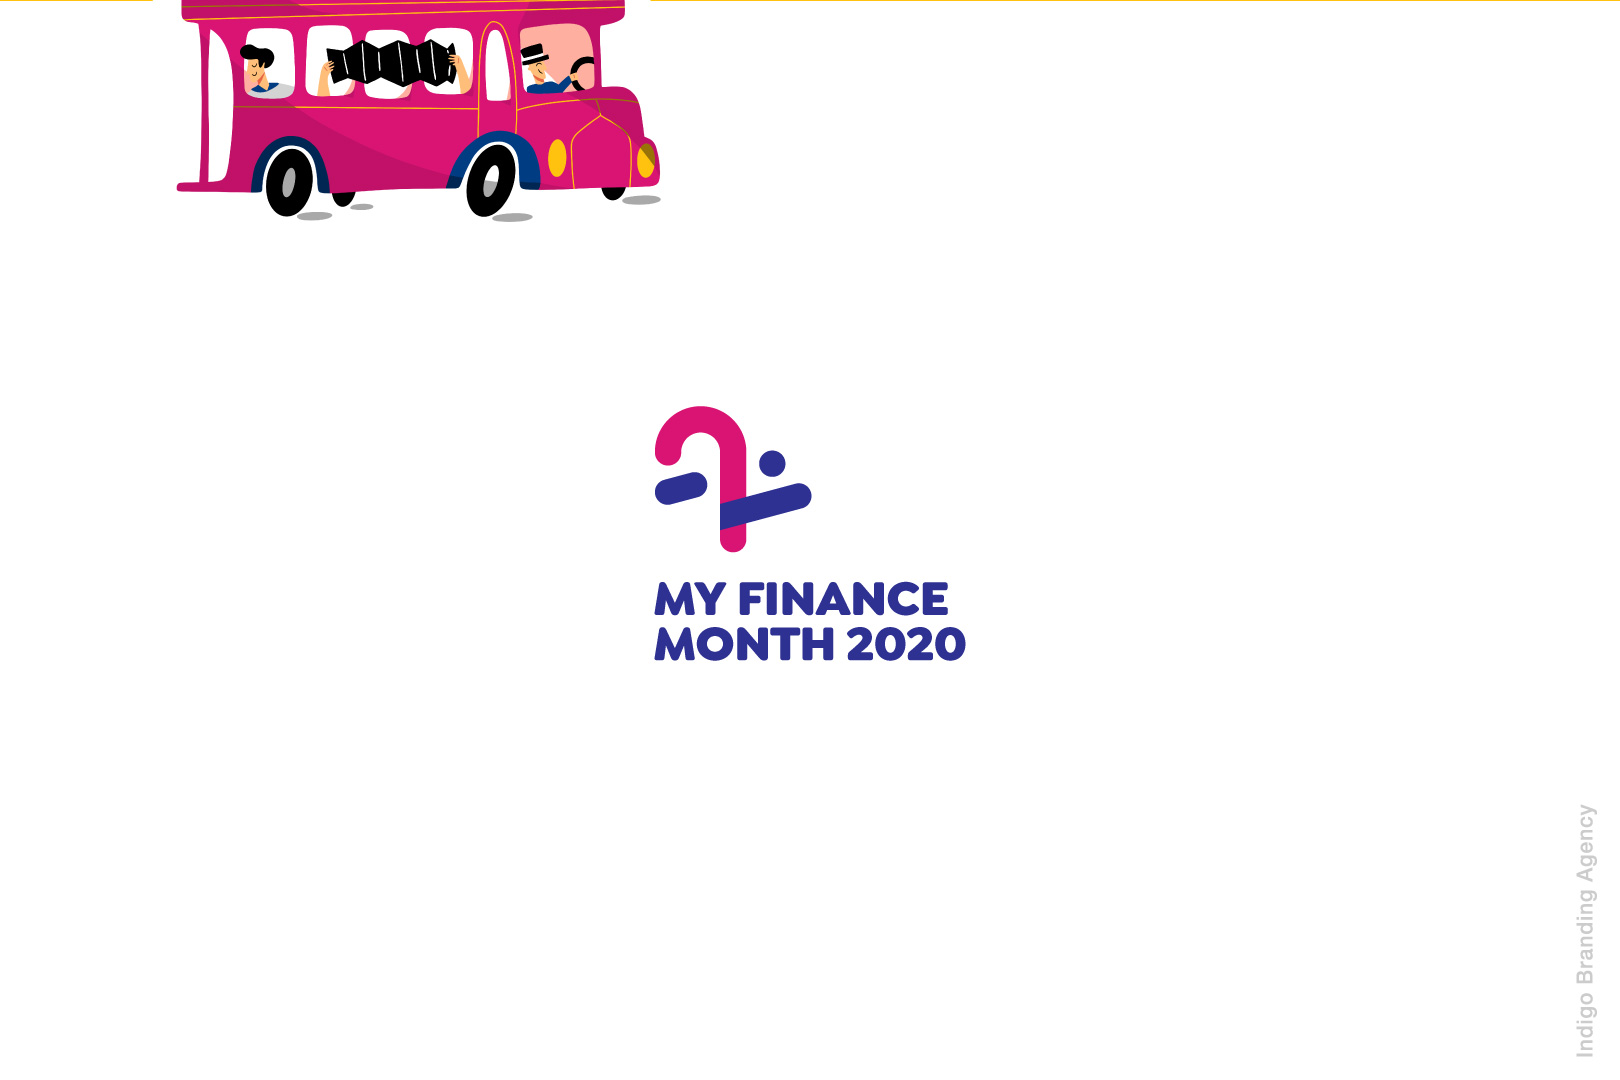 My Finance Month (MFM) branding and logo design by Indigo branding